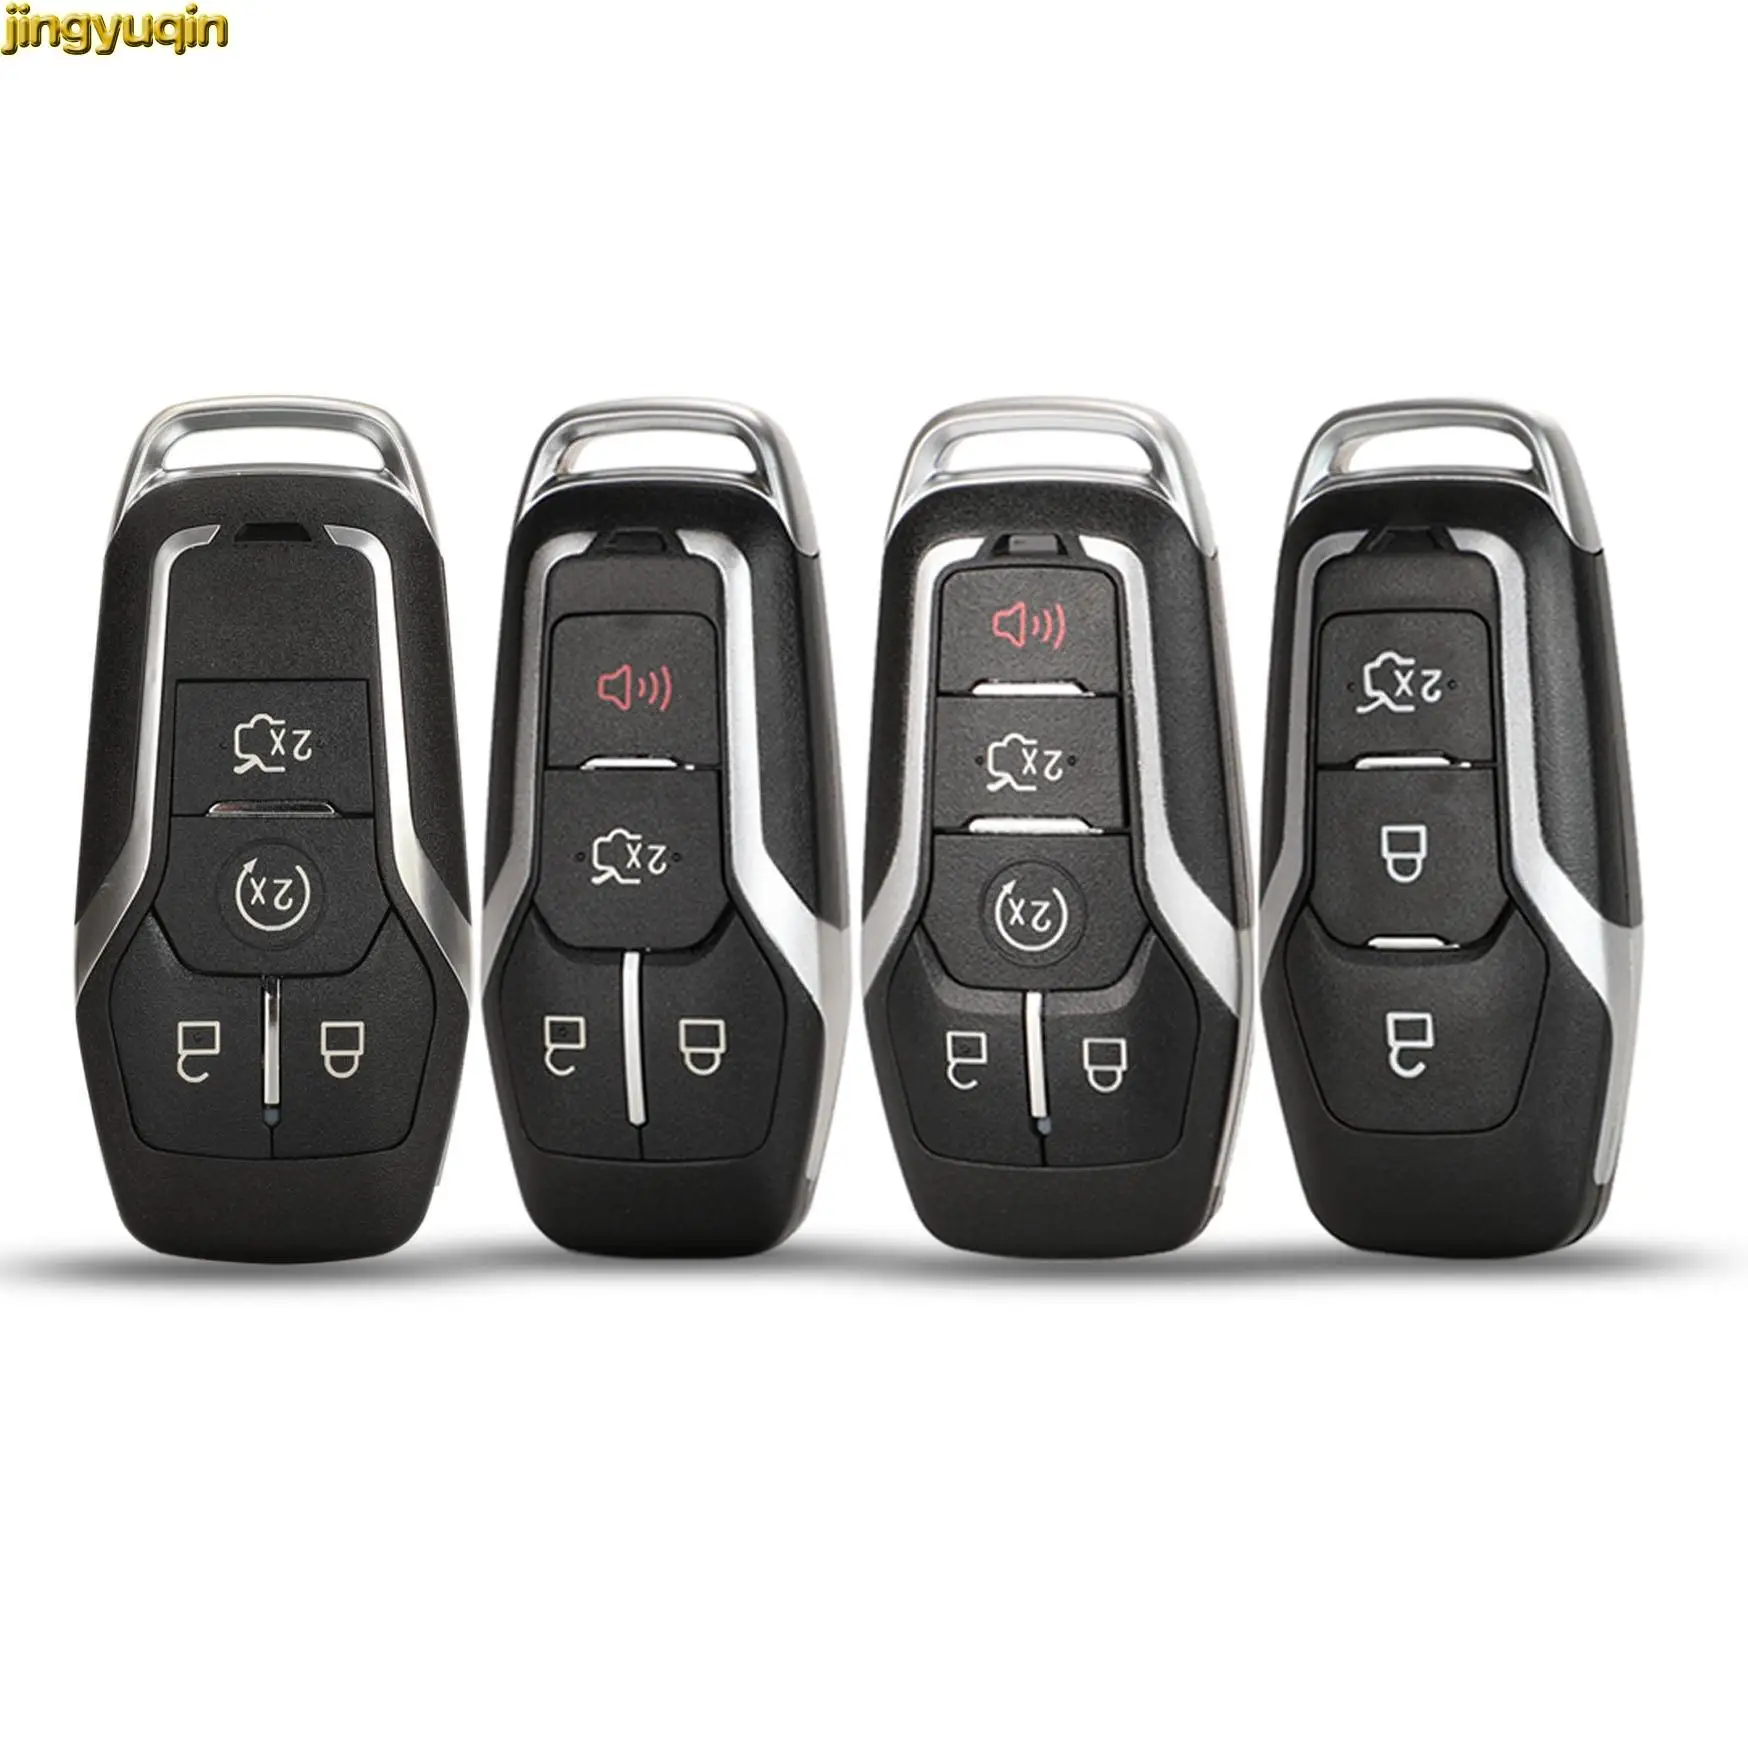 Jingyuqin 3/4/5 Button Remote Car Key Shell For Ford Edge Explorer Fusion 2013 2014 2015 2016 2017 M3N-A2C31243300 Smart Key Fob